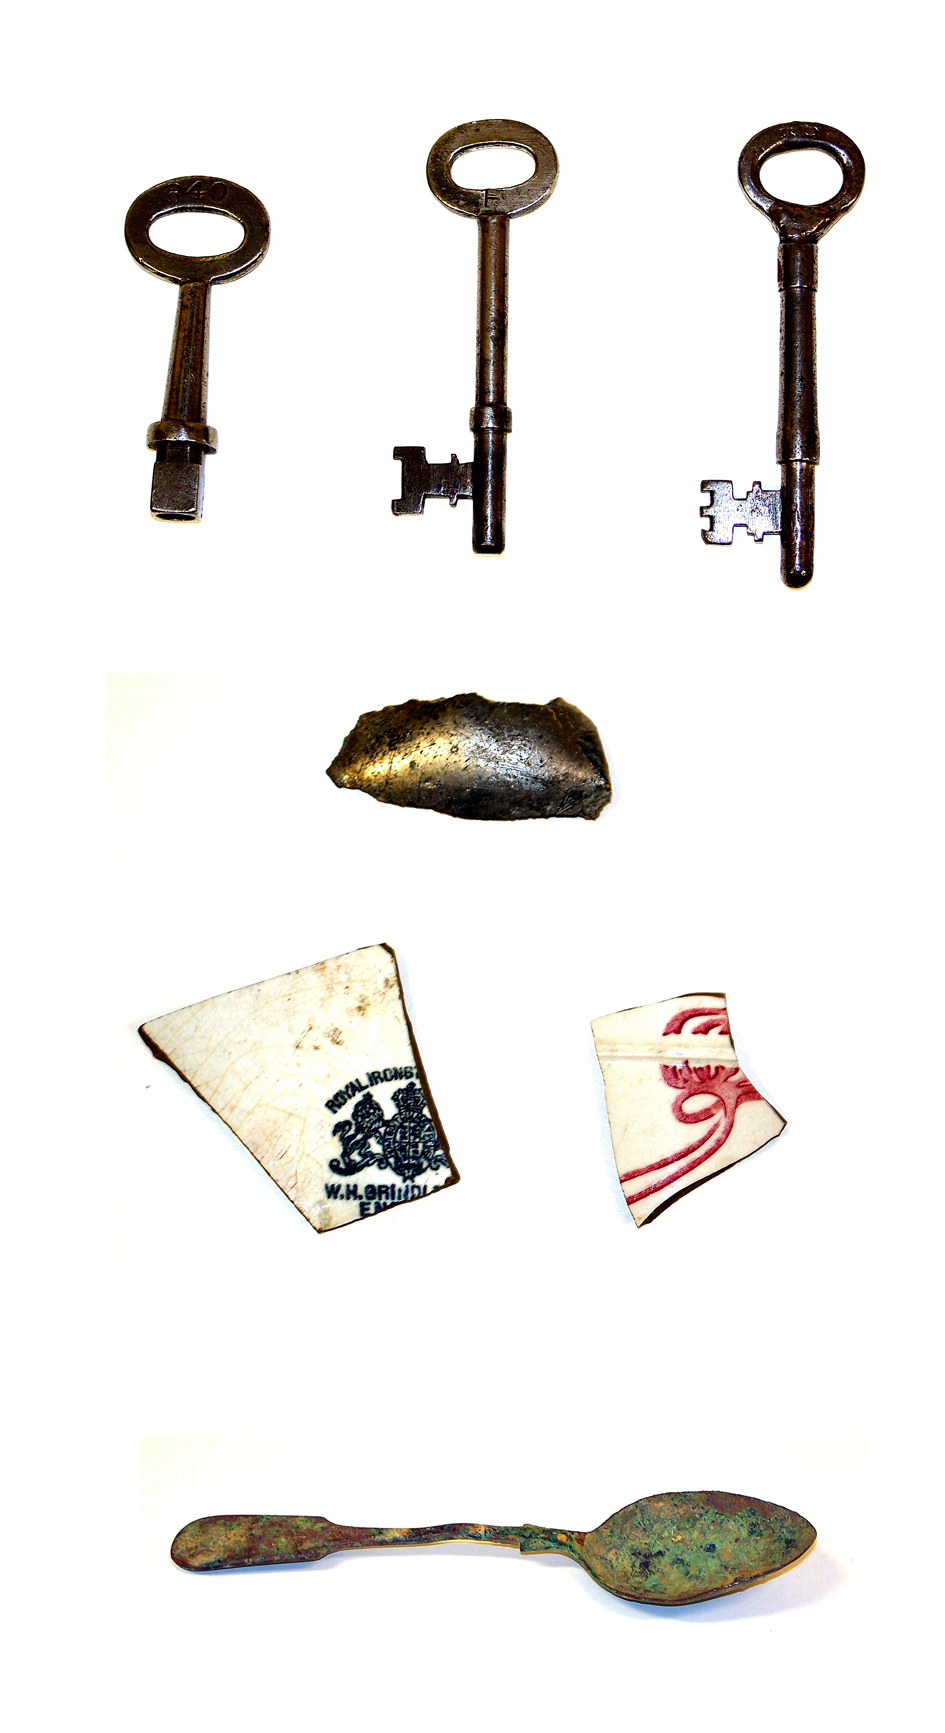 Archaeological Finds - Parramatta Site (Female Orphan School) - Spoon, Keys, Pottery